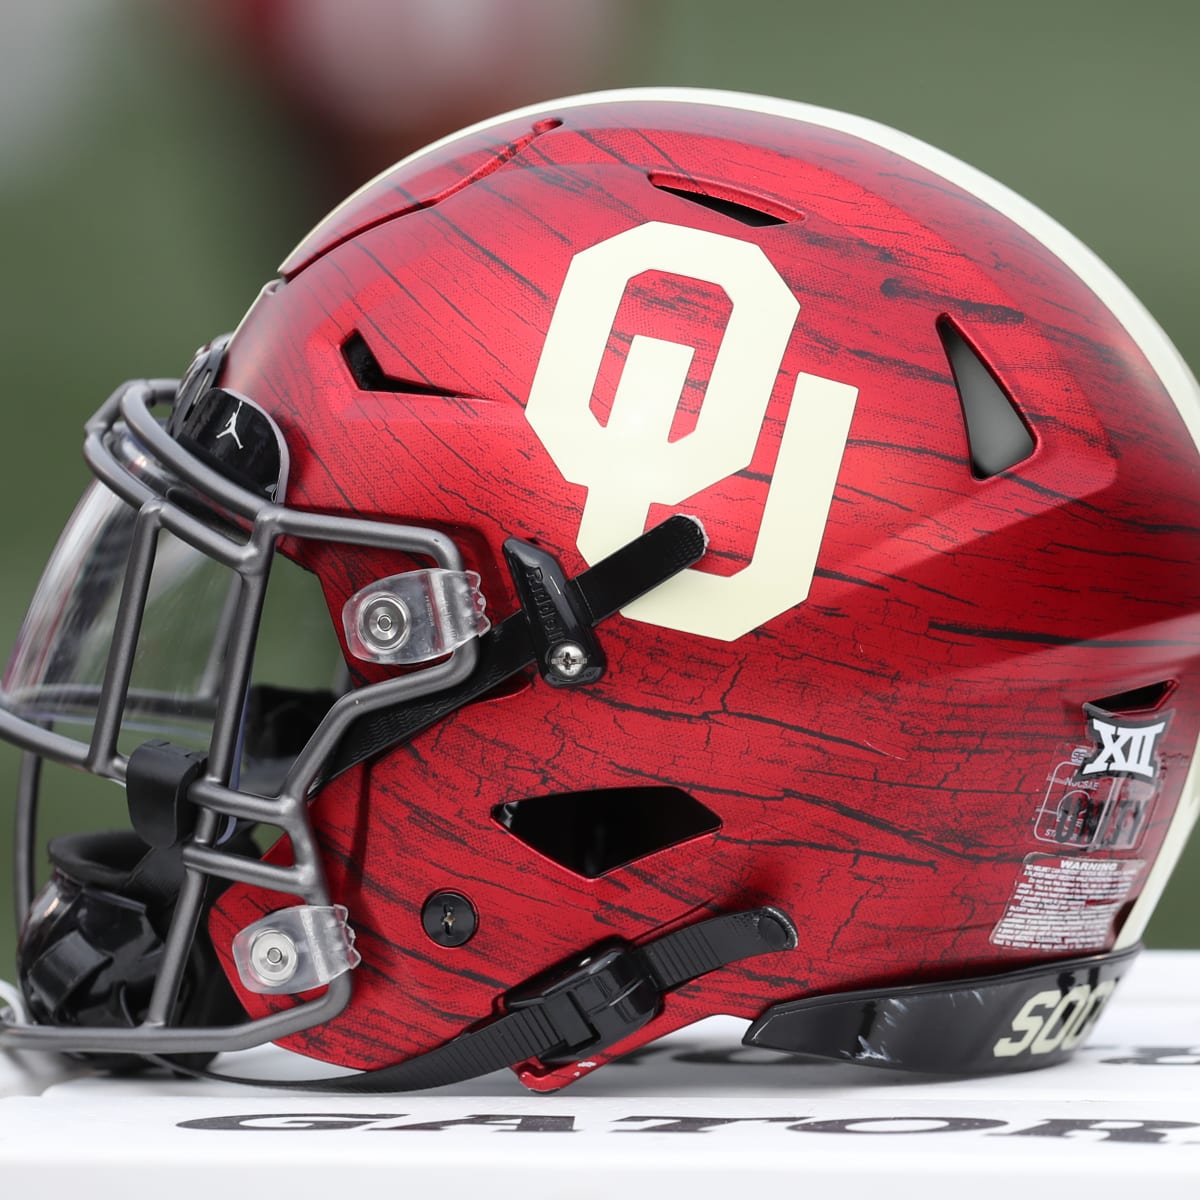 Oklahoma unveiled two new alternate uniforms (Video)